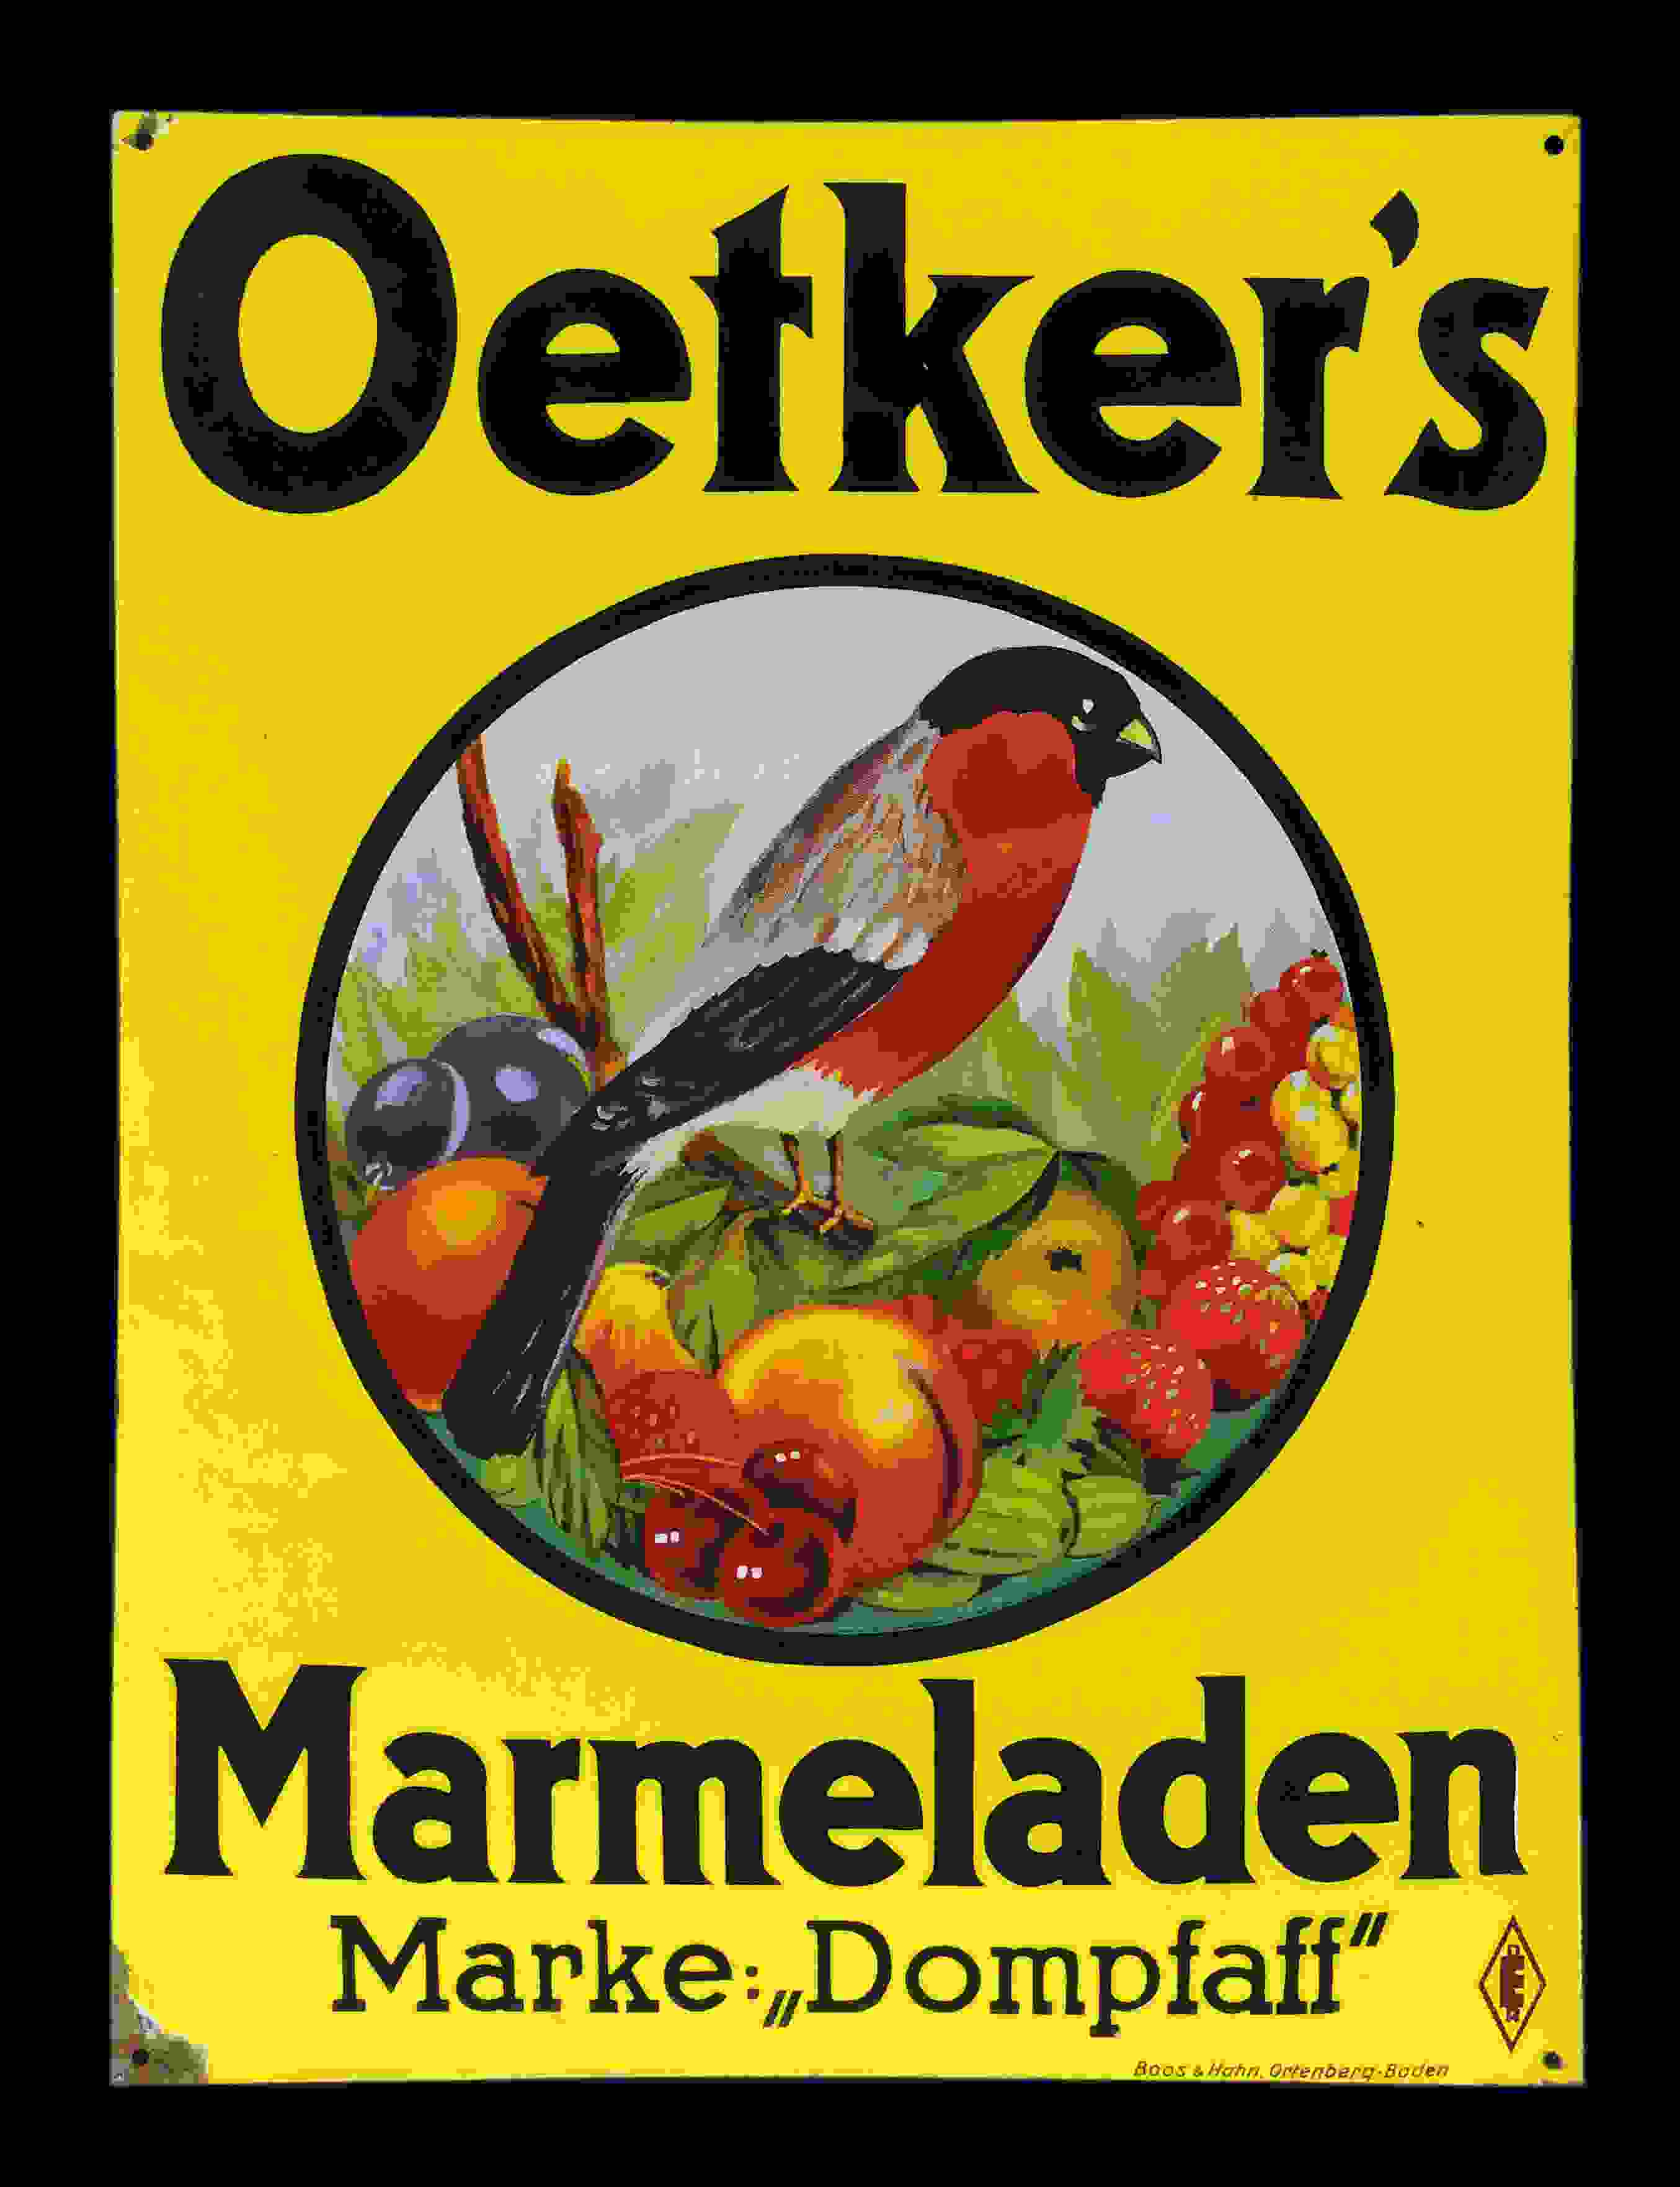 Oetker's Marmeladen Marke "Dompfaff" 